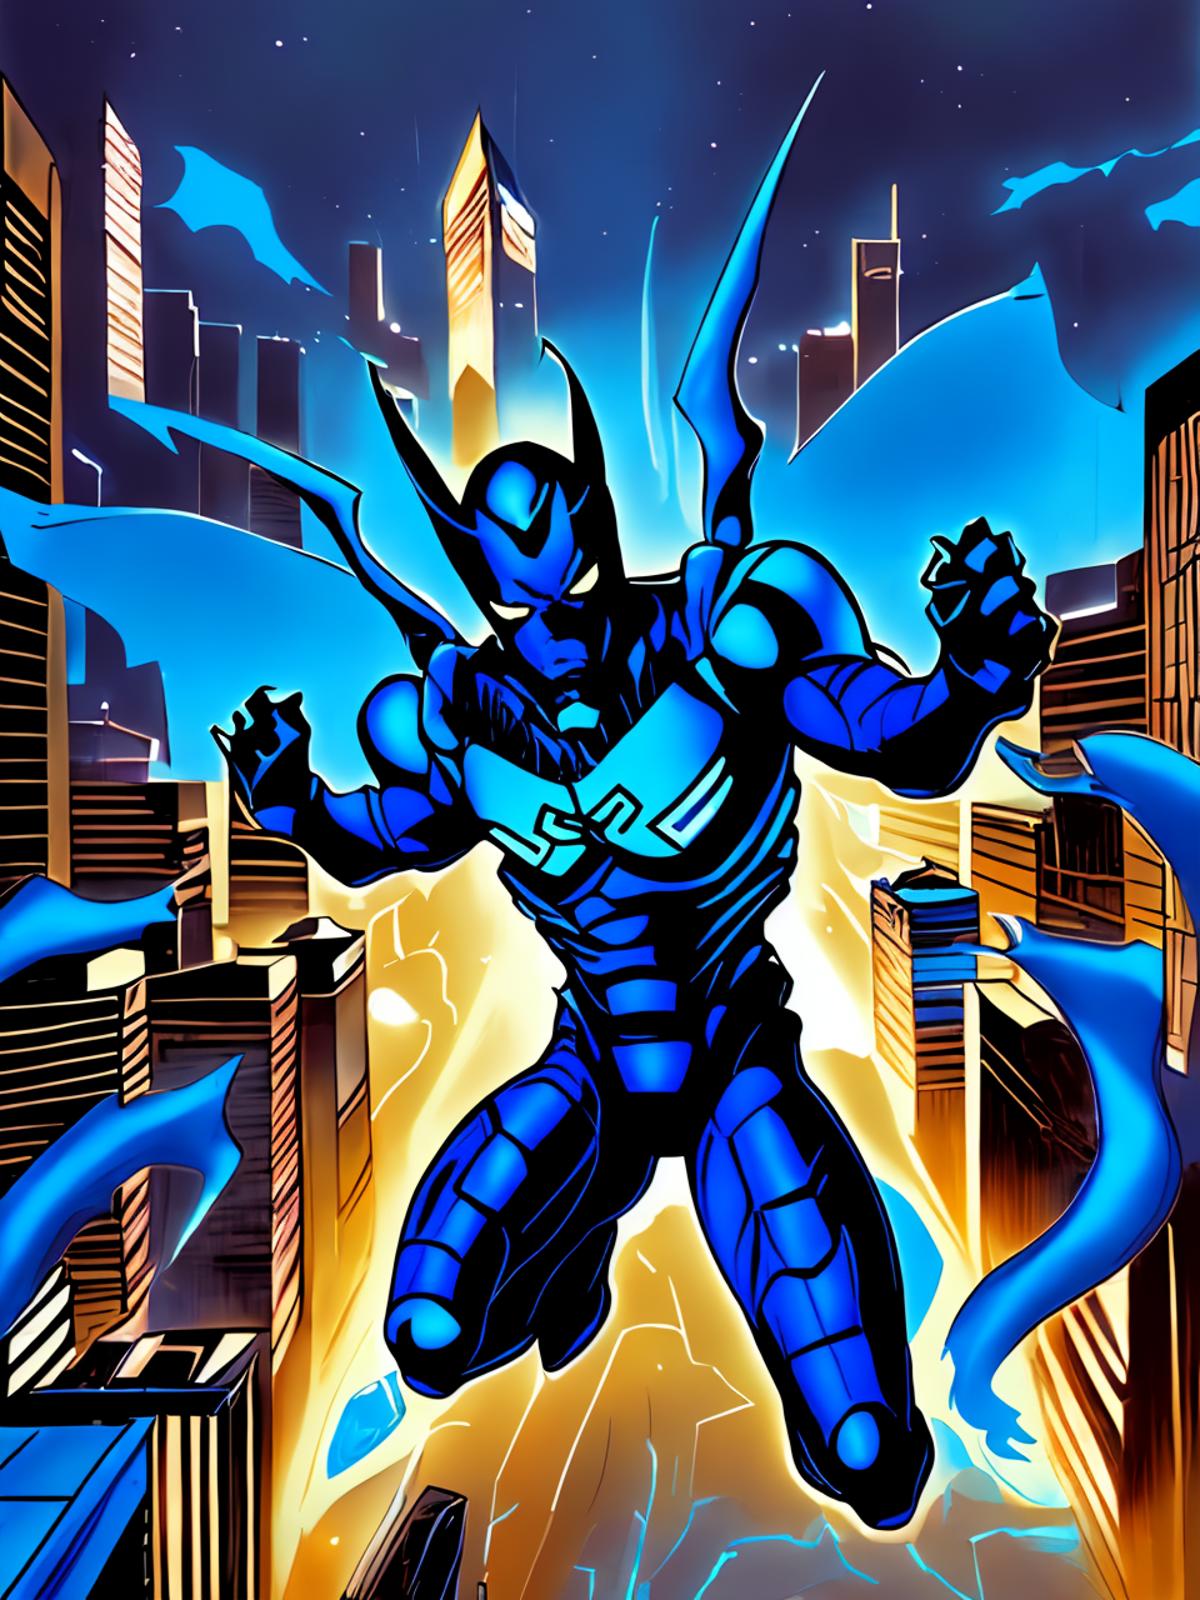 Blue Beetle (DC Comics) (DCEU) image by lechuckai500